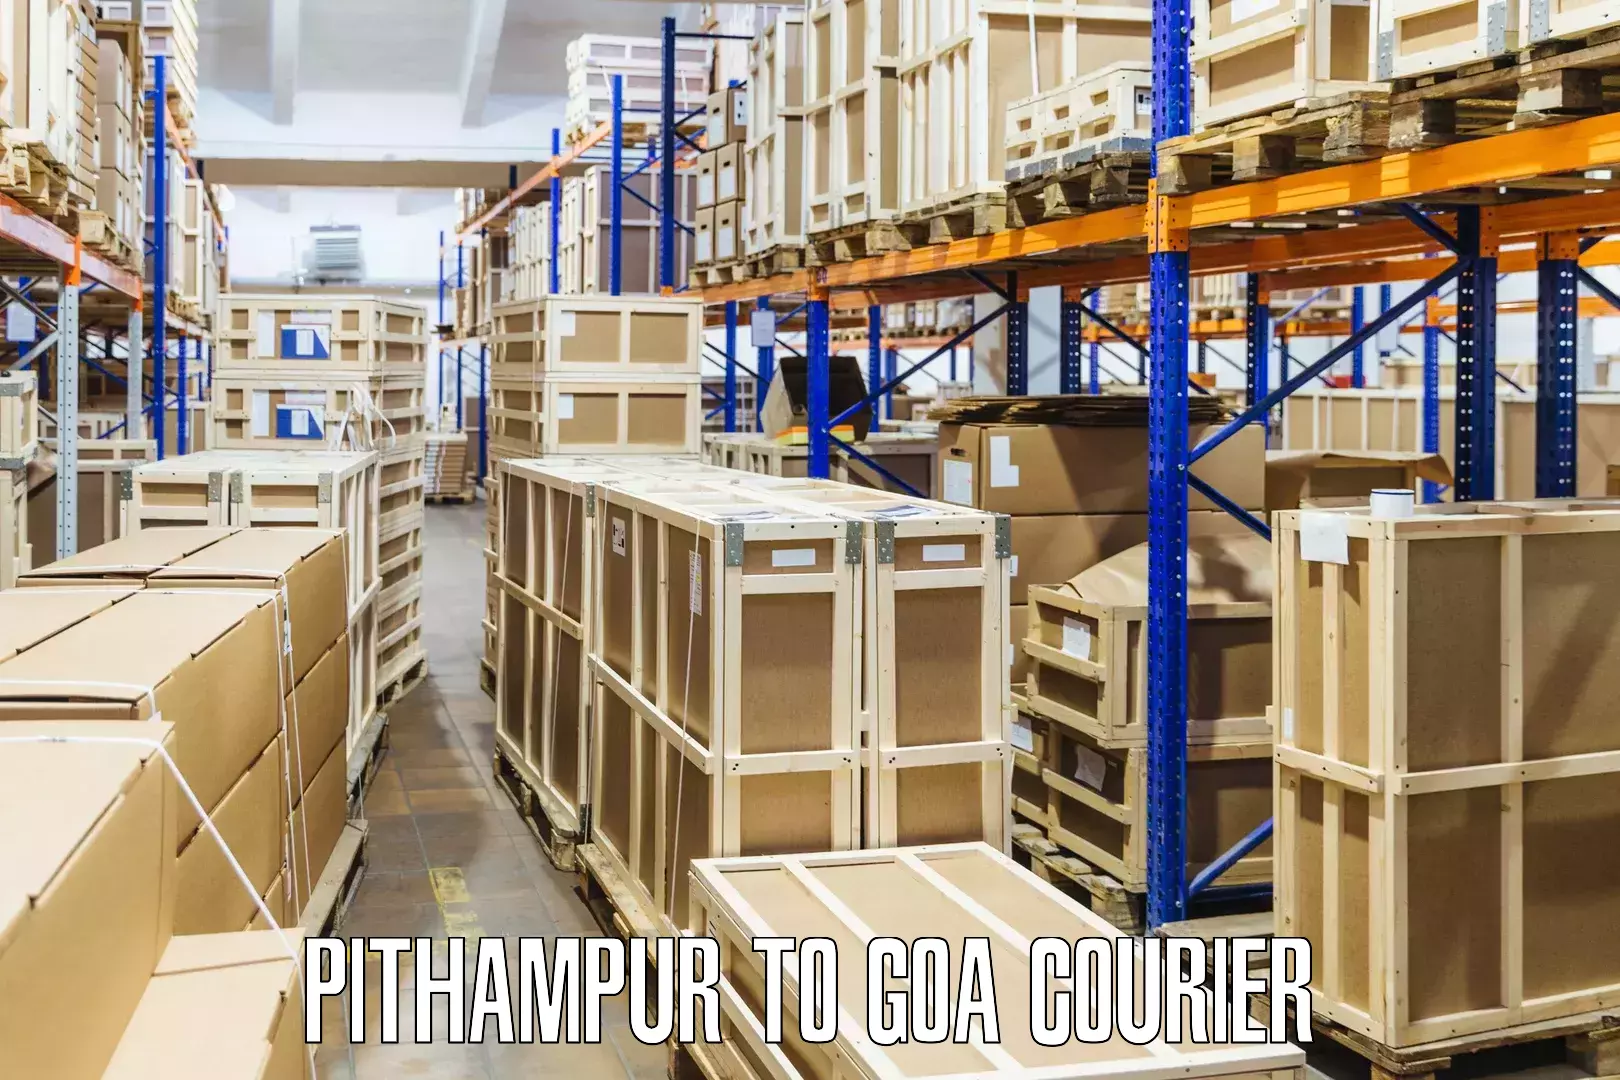 International courier networks Pithampur to Vasco da Gama